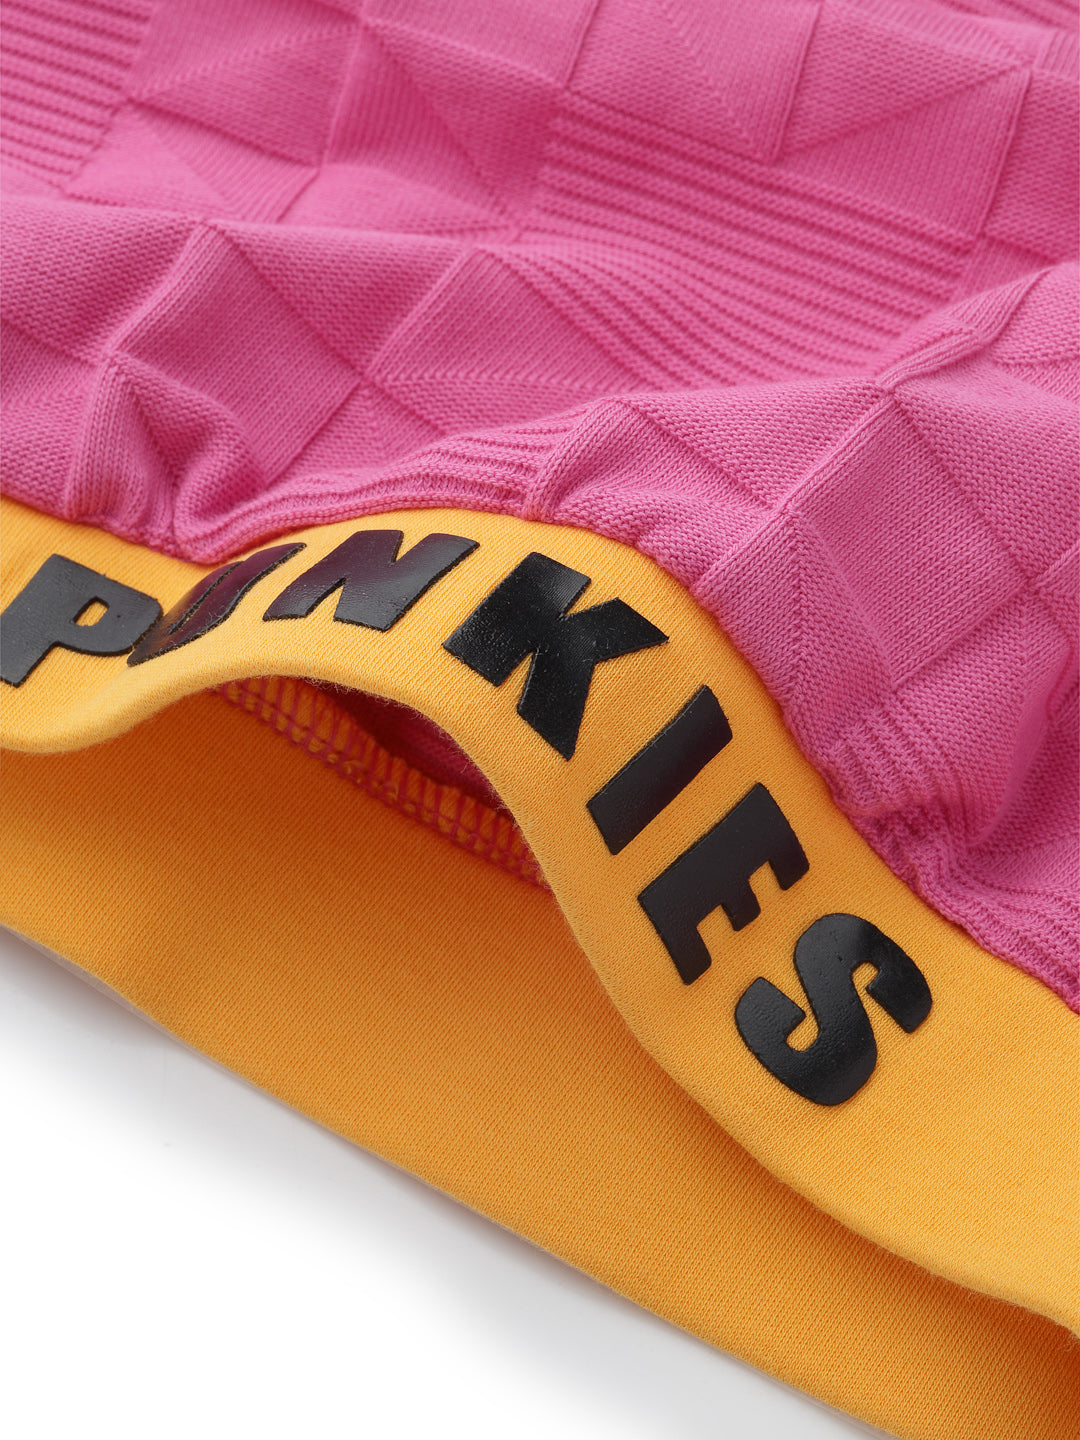 Rose pink trendy G-knit sleeveless top